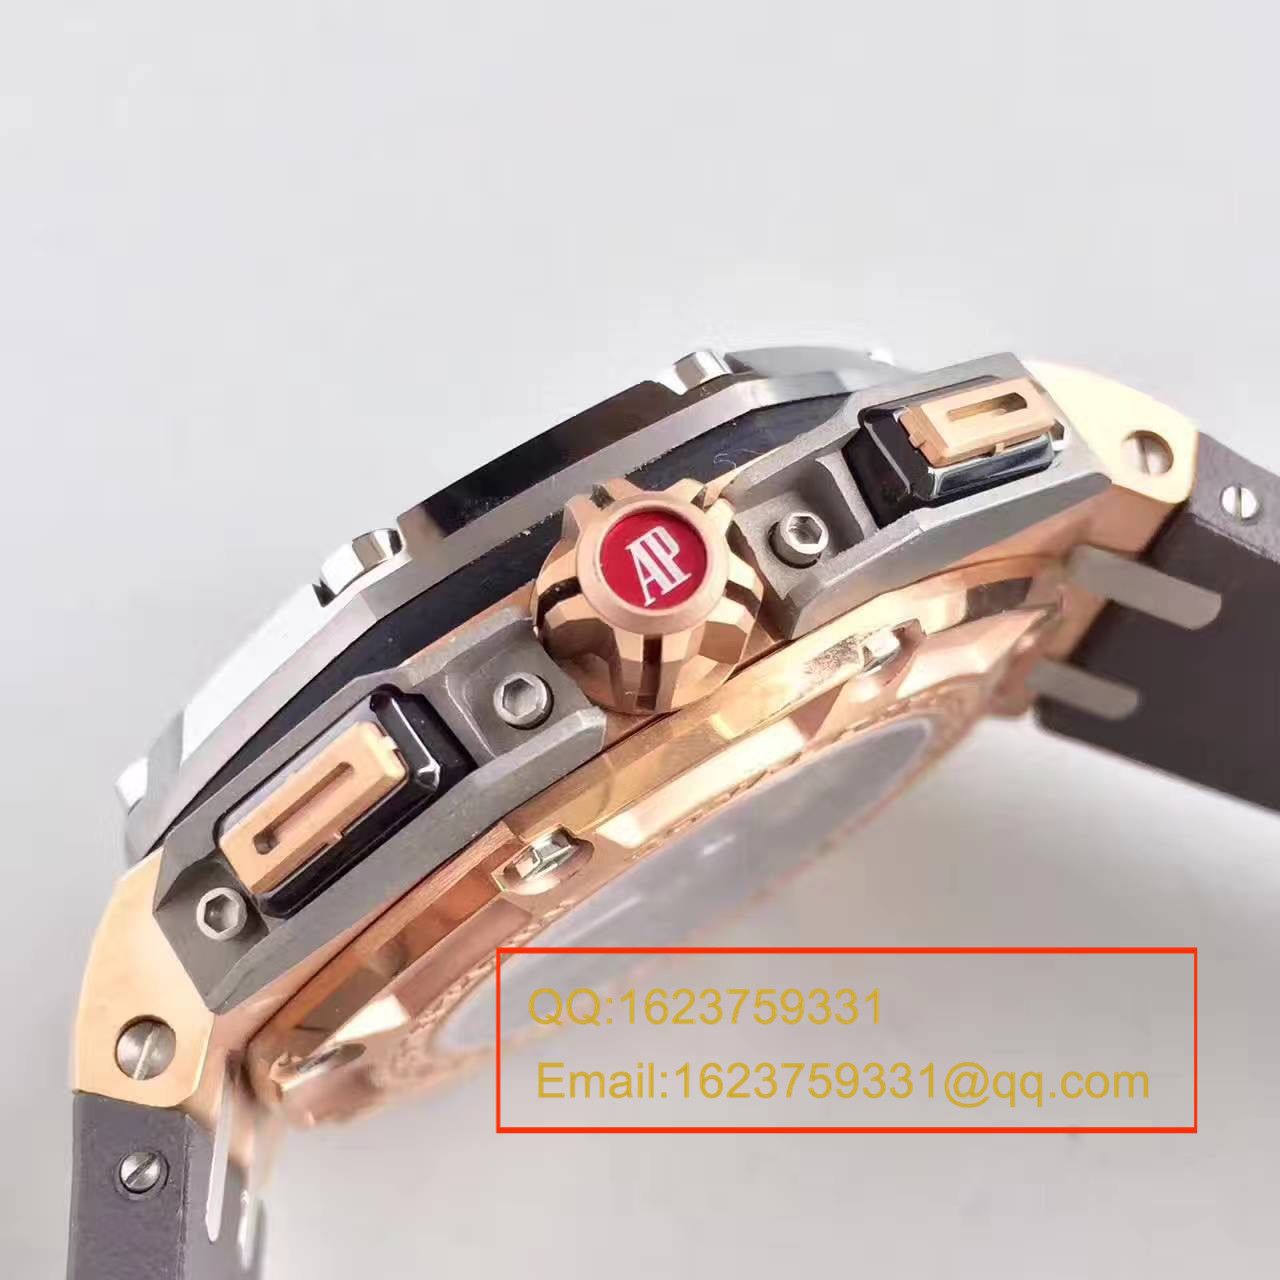 【JF厂超A高仿手表】爱彼皇家橡树离岸型系列舒马赫26568OM.OO.A004CA.01机械腕表 